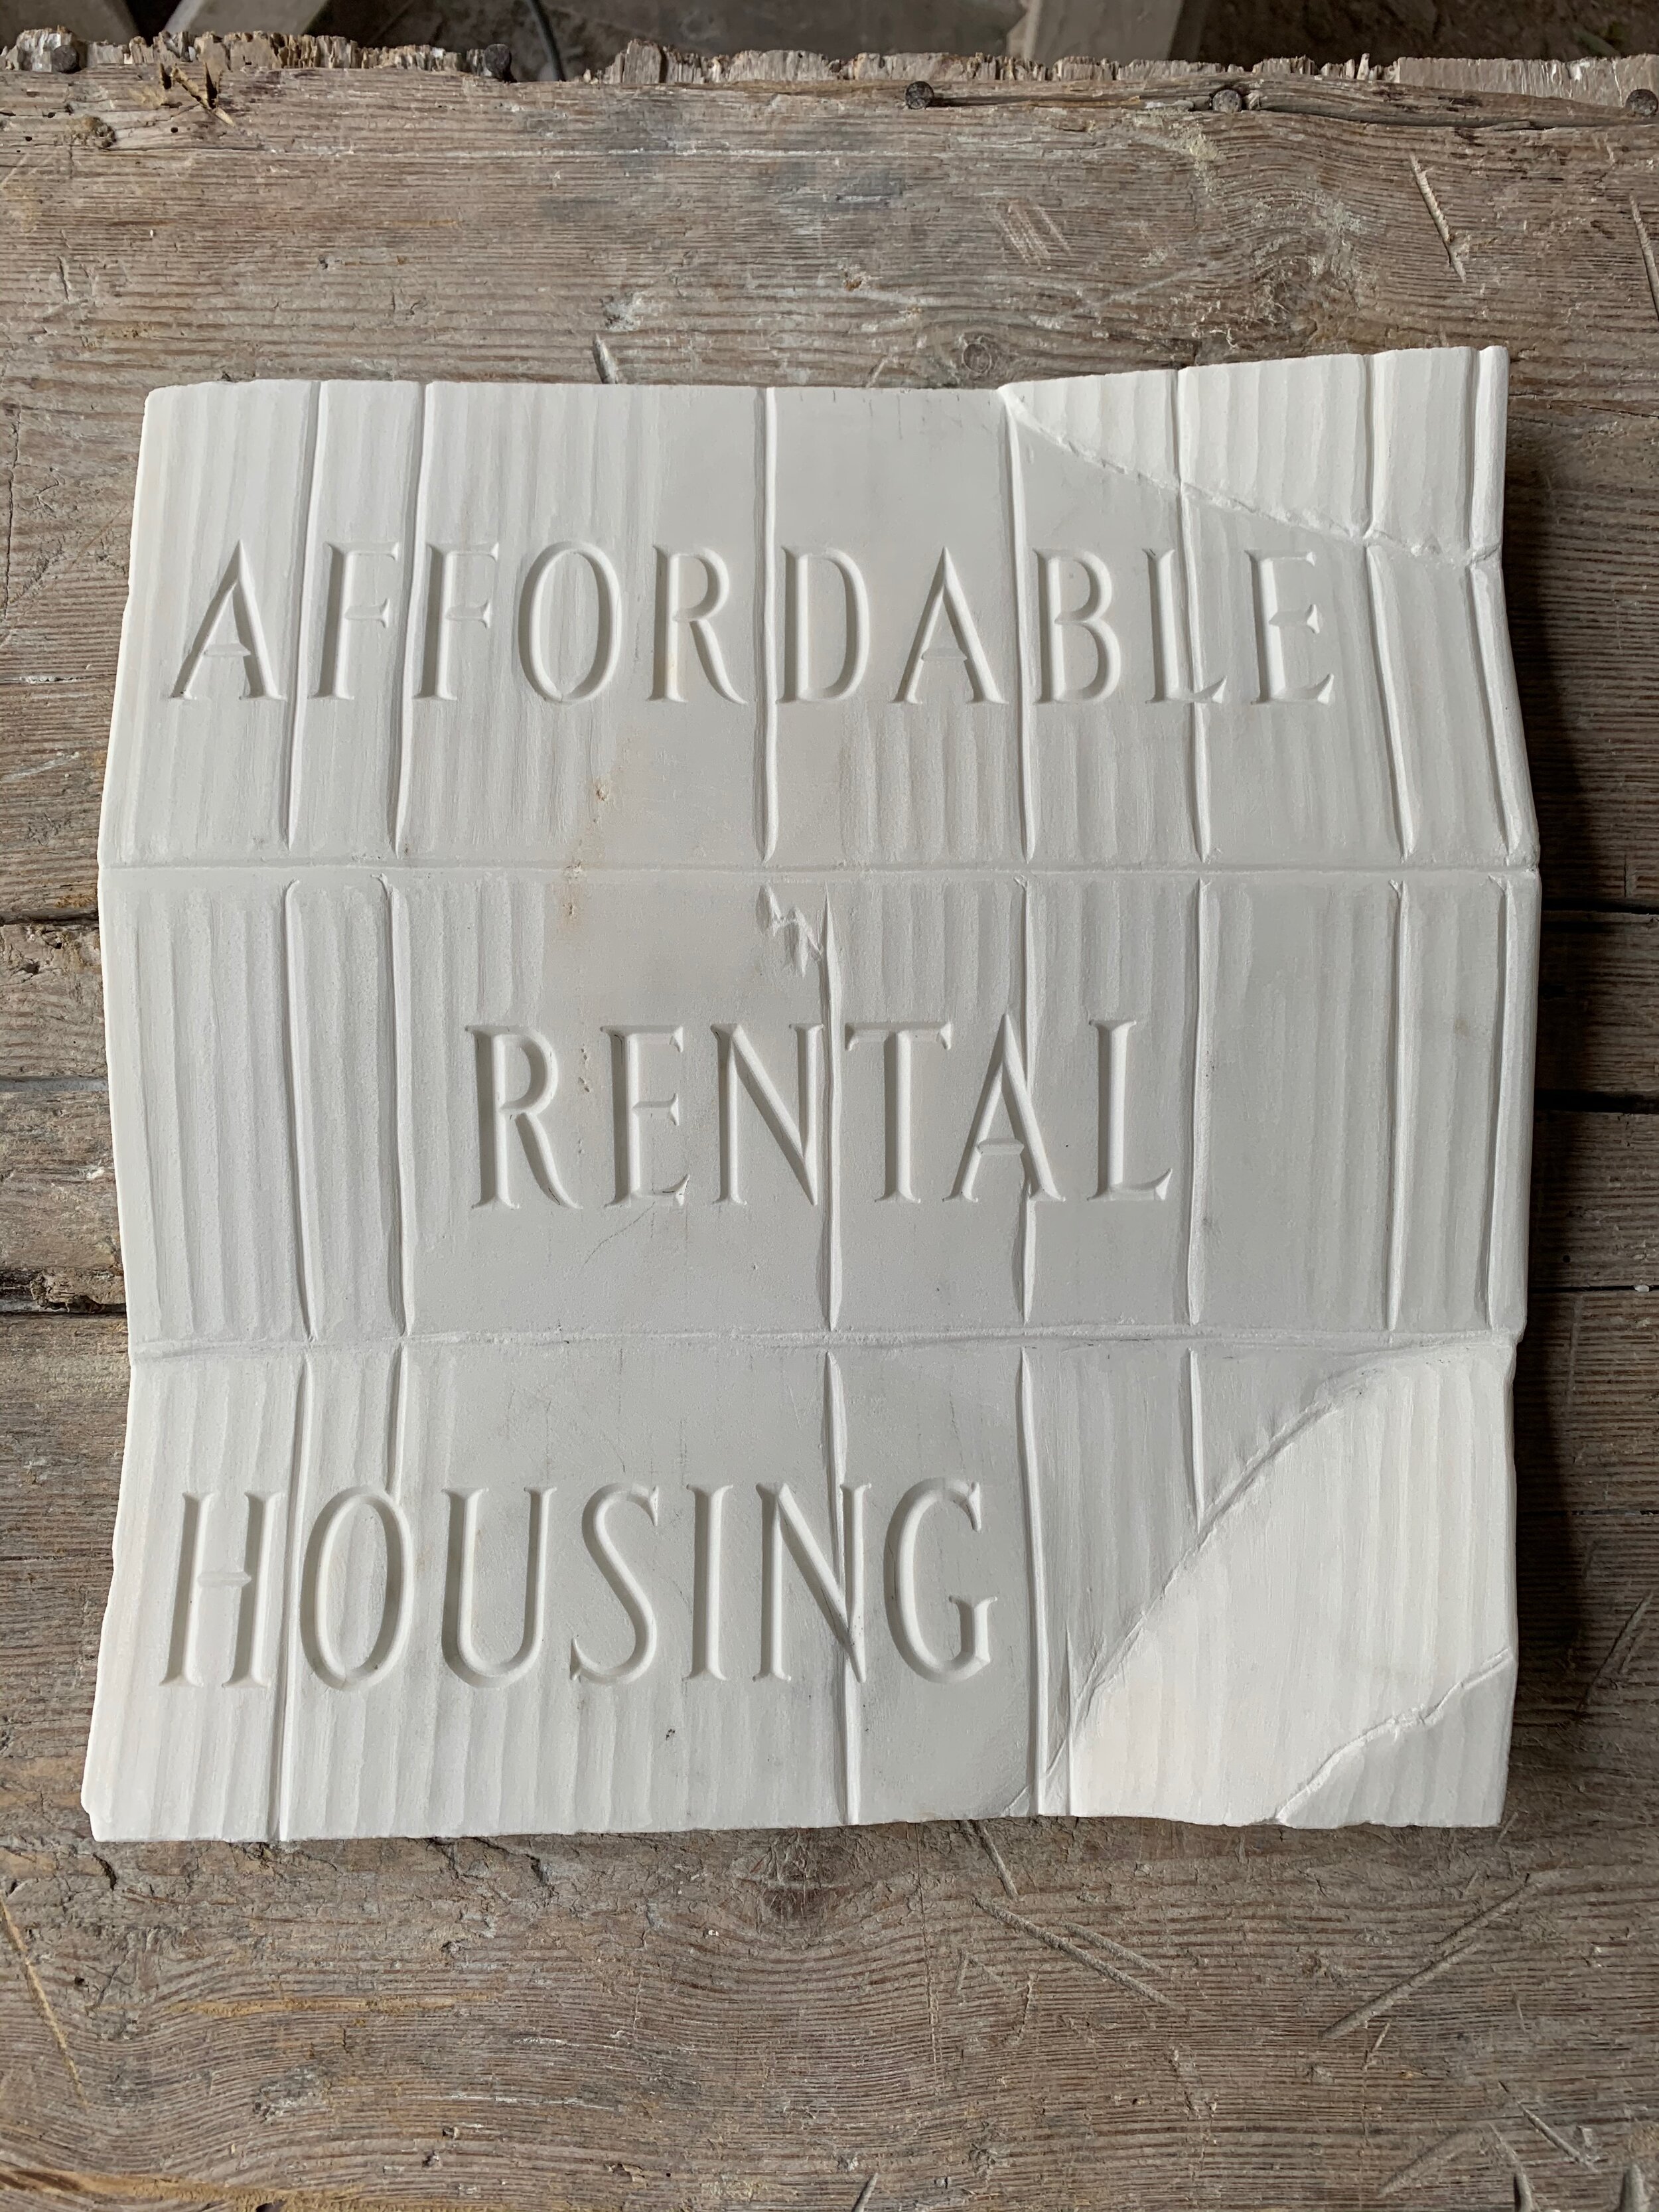 Affordable Rental Housing.jpg